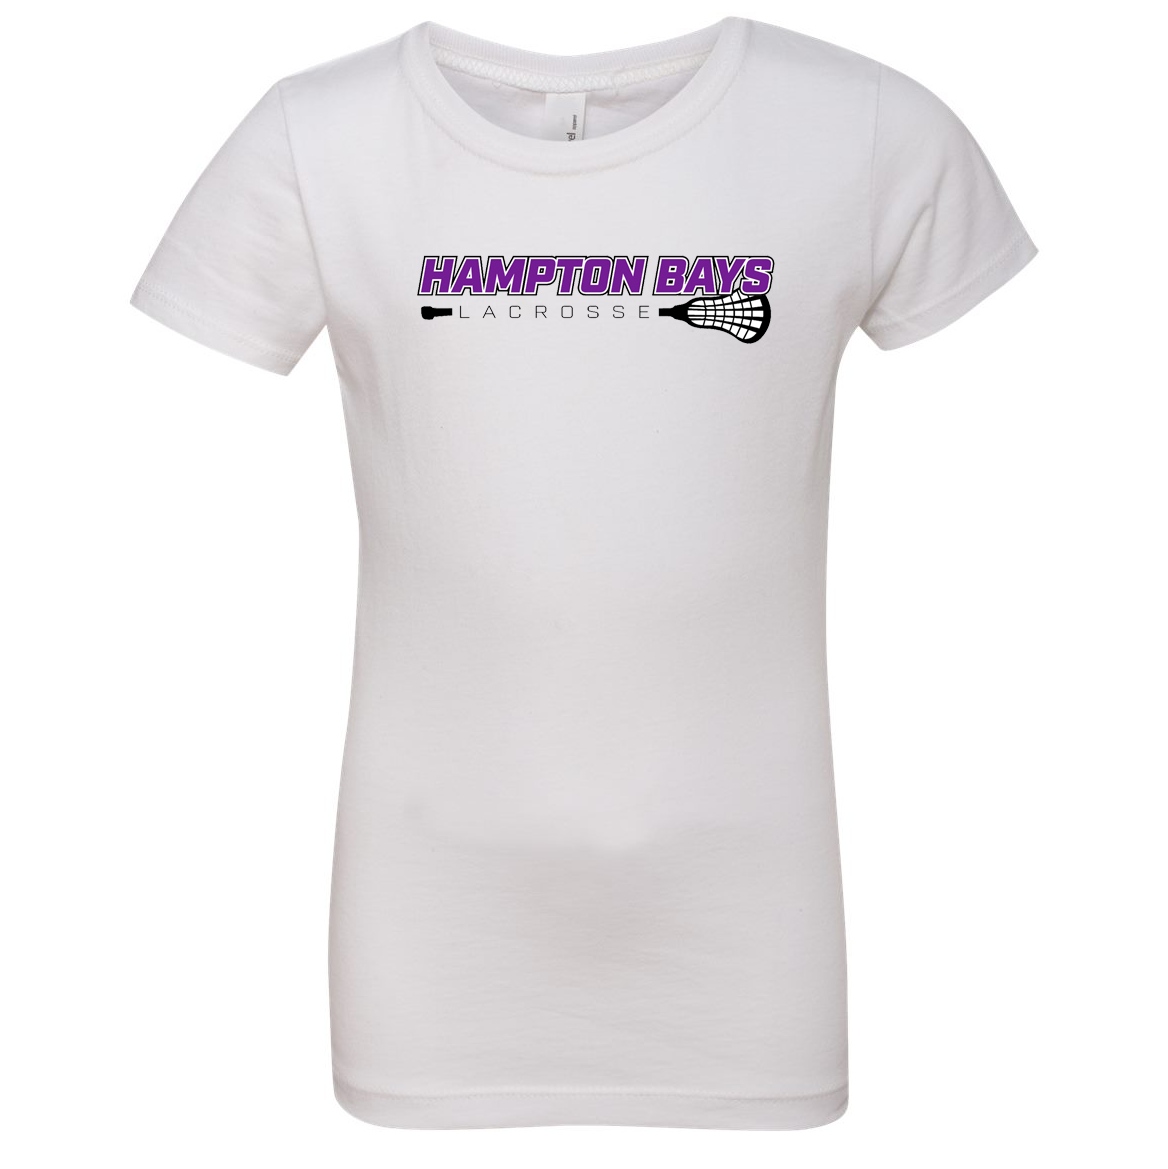 Hampton Bays Lacrosse Girls Princess Crew